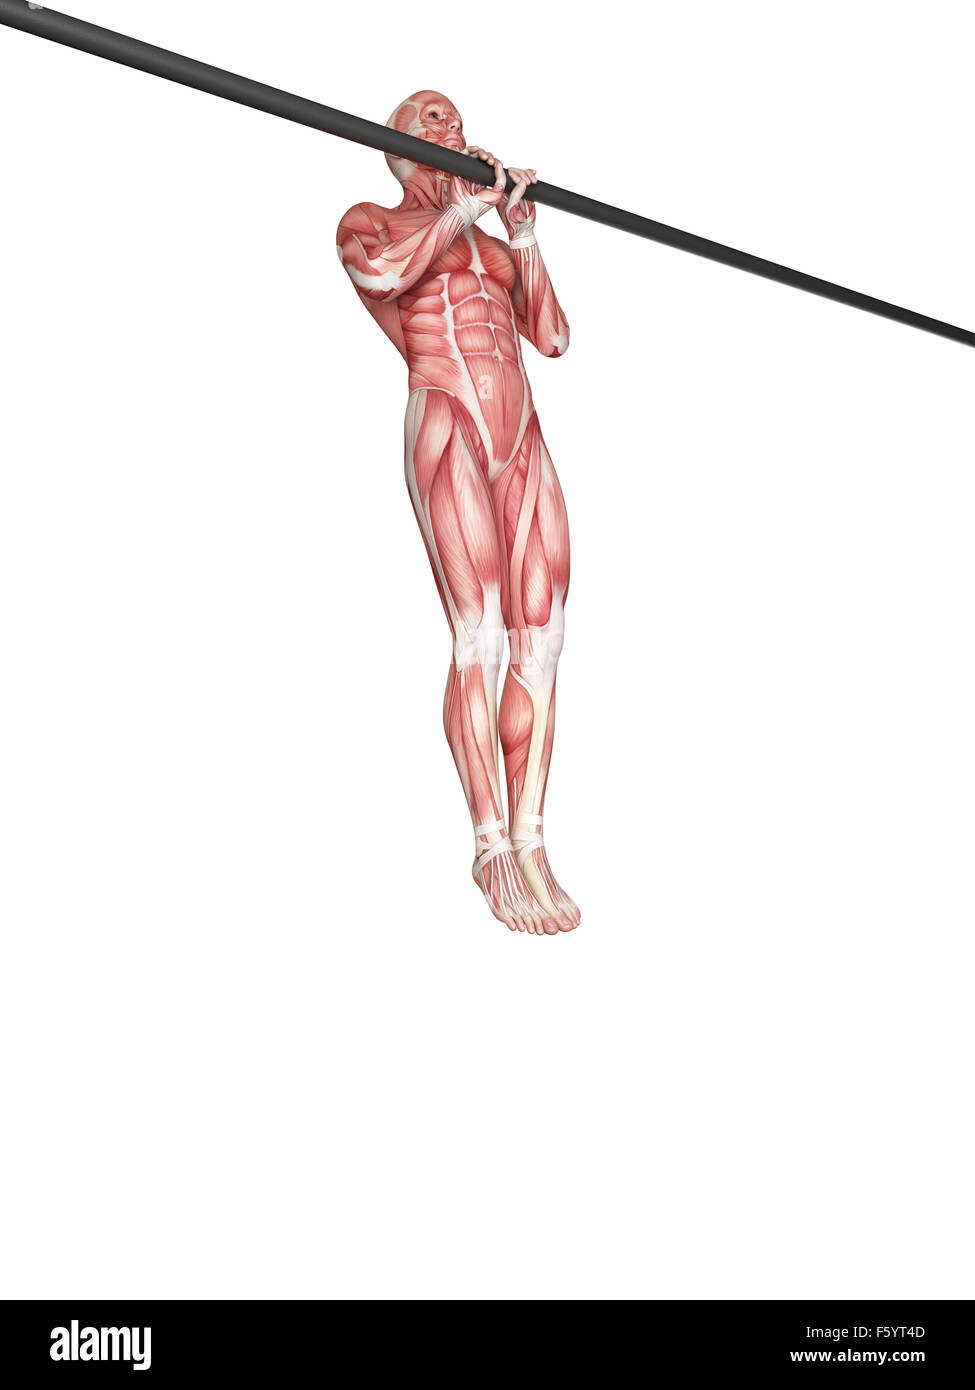 exercise illustration - close grip pull ups Stock Photo